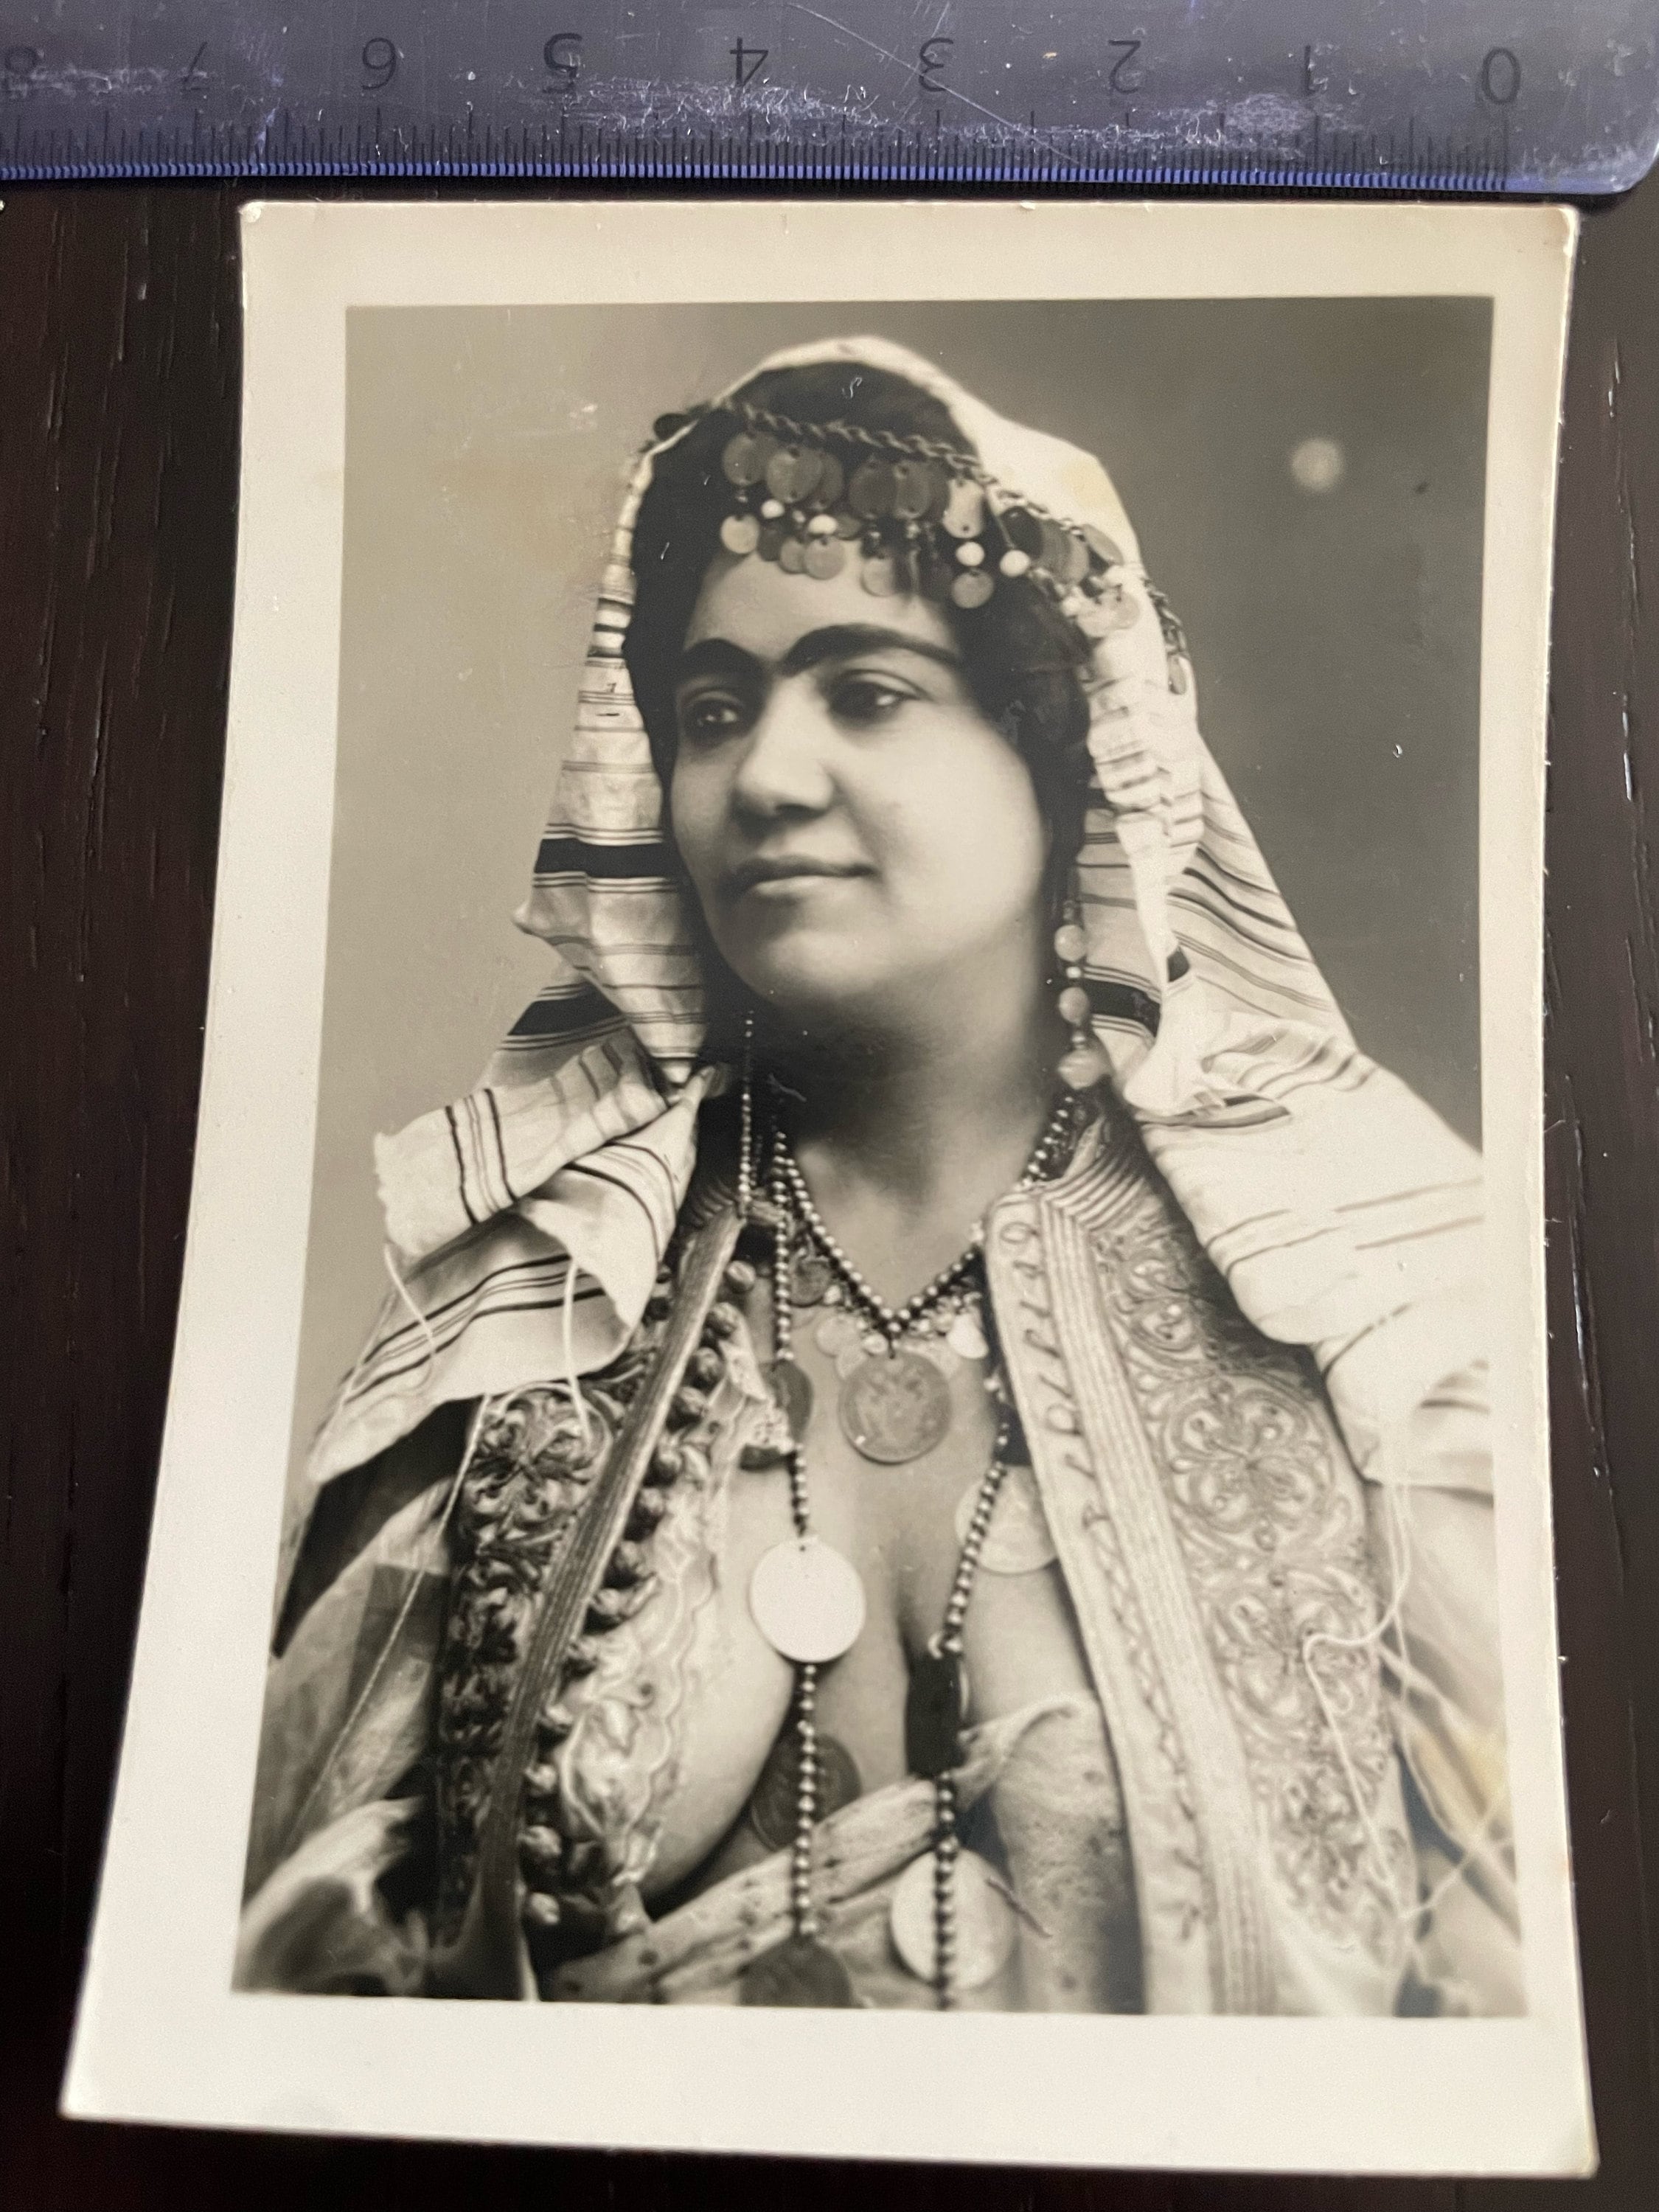 North Africa Nude Harem Arab Egyptian Girl Ethnic Real Photo Vintage Photograph Etsy